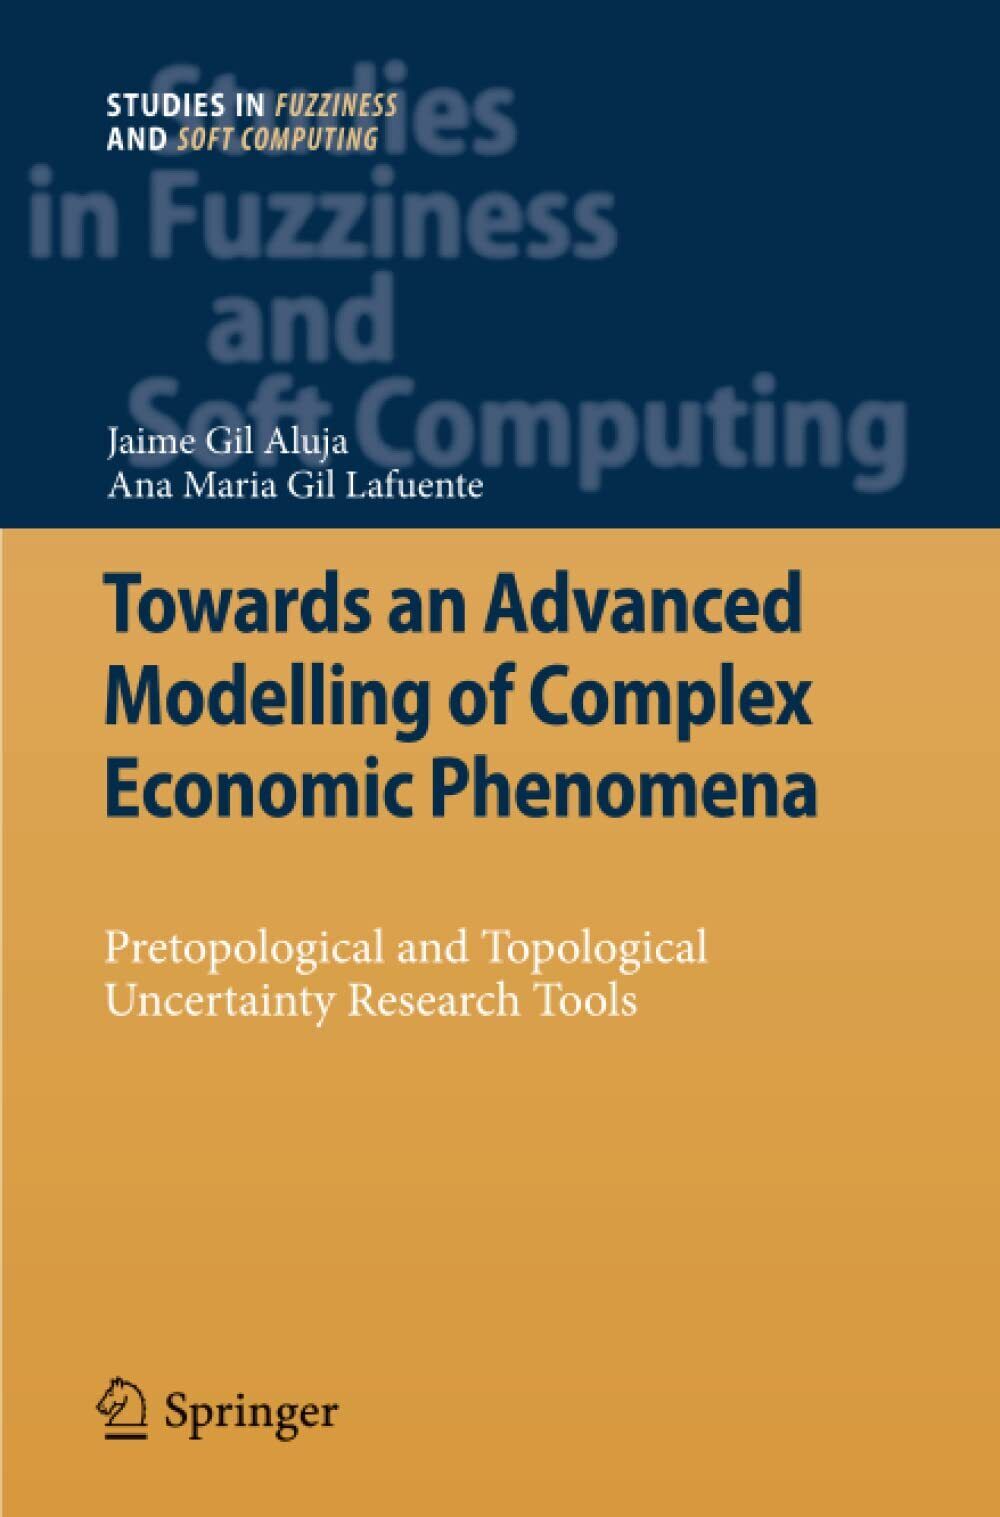 Towards an Advanced Modelling of Complex Economic Phenomena - Springer, 2014 libro usato